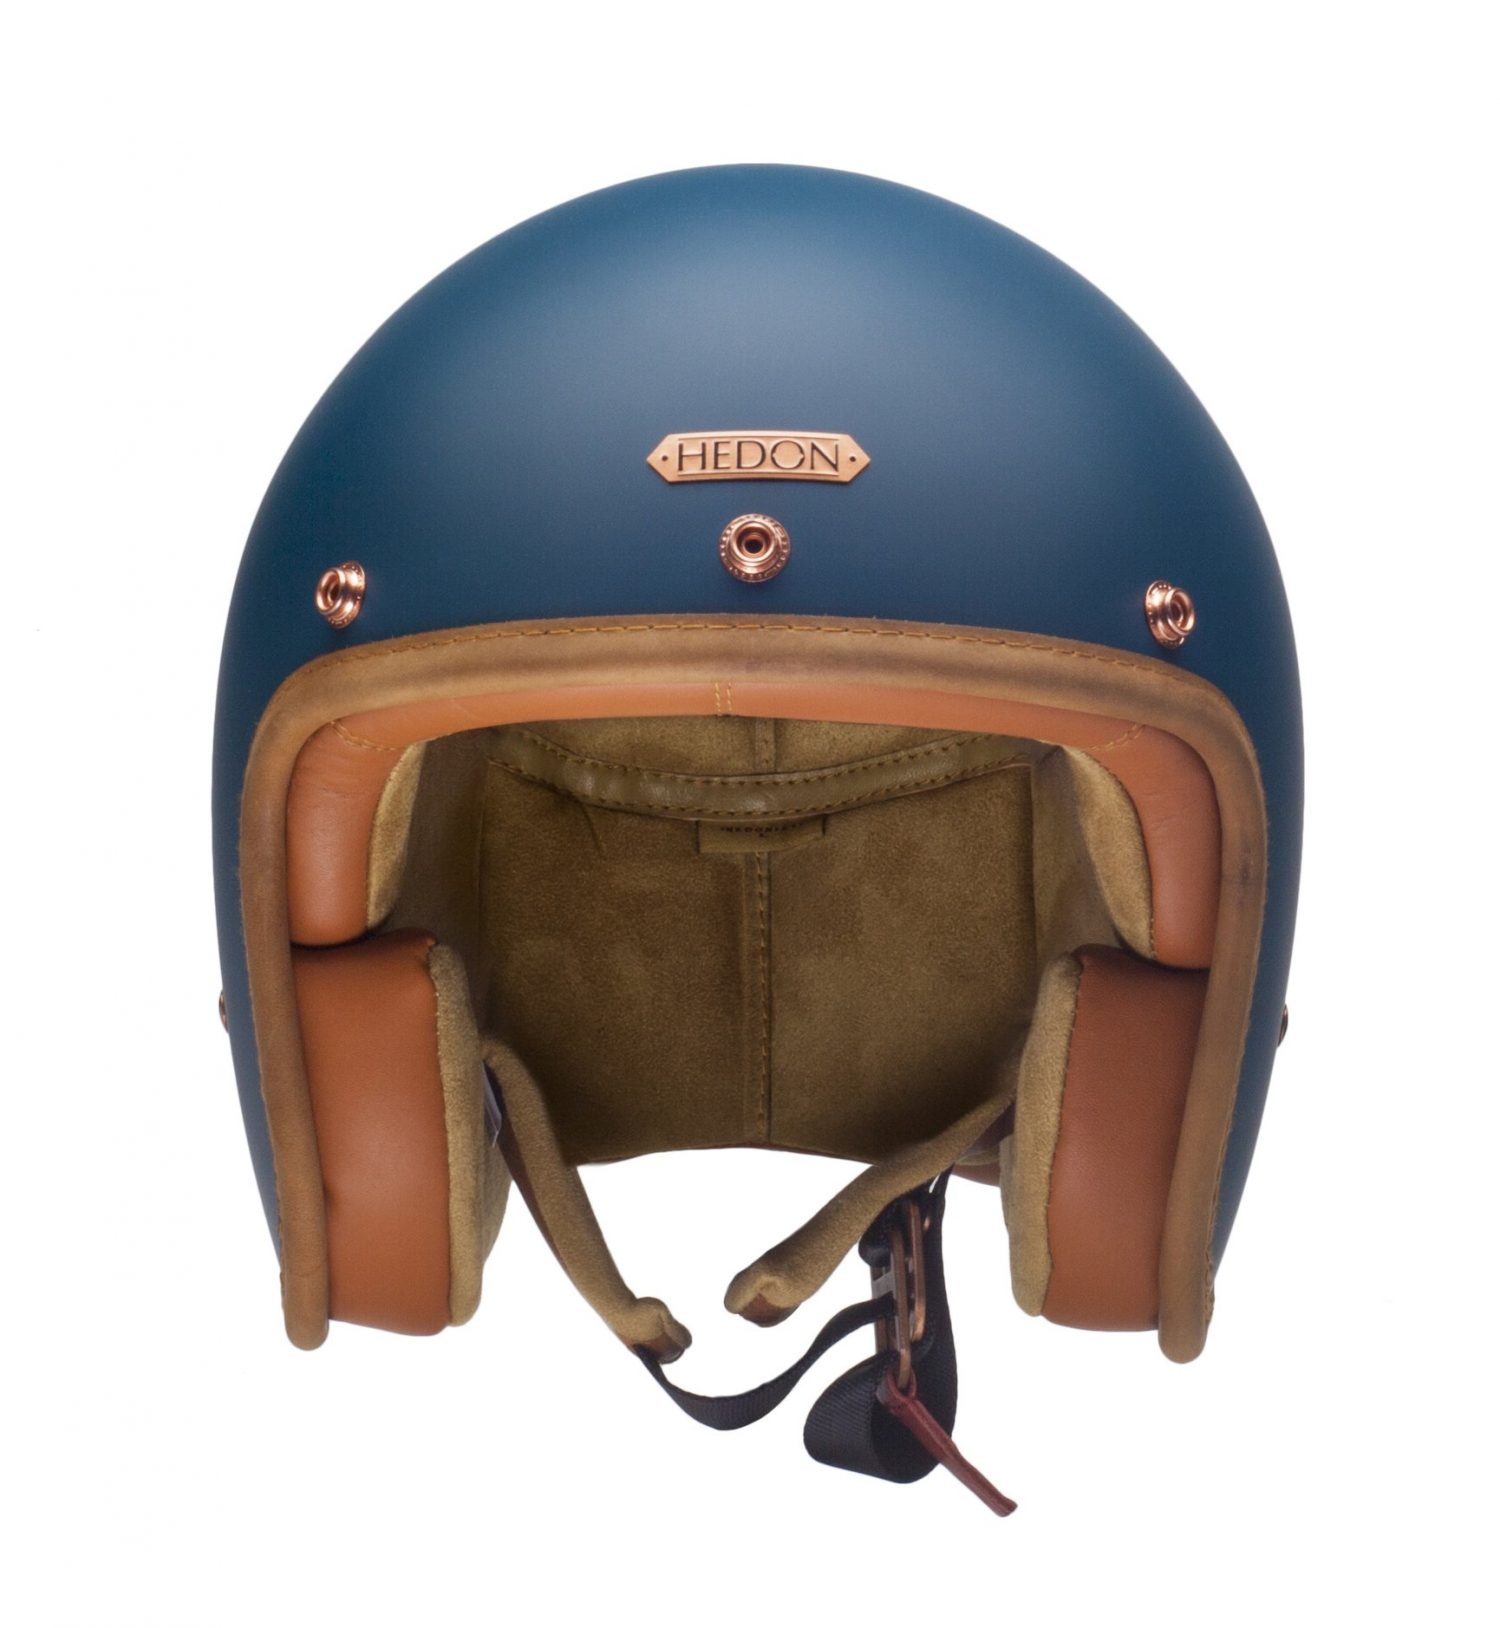 hedon light blue teal motorcycle helmet light inside